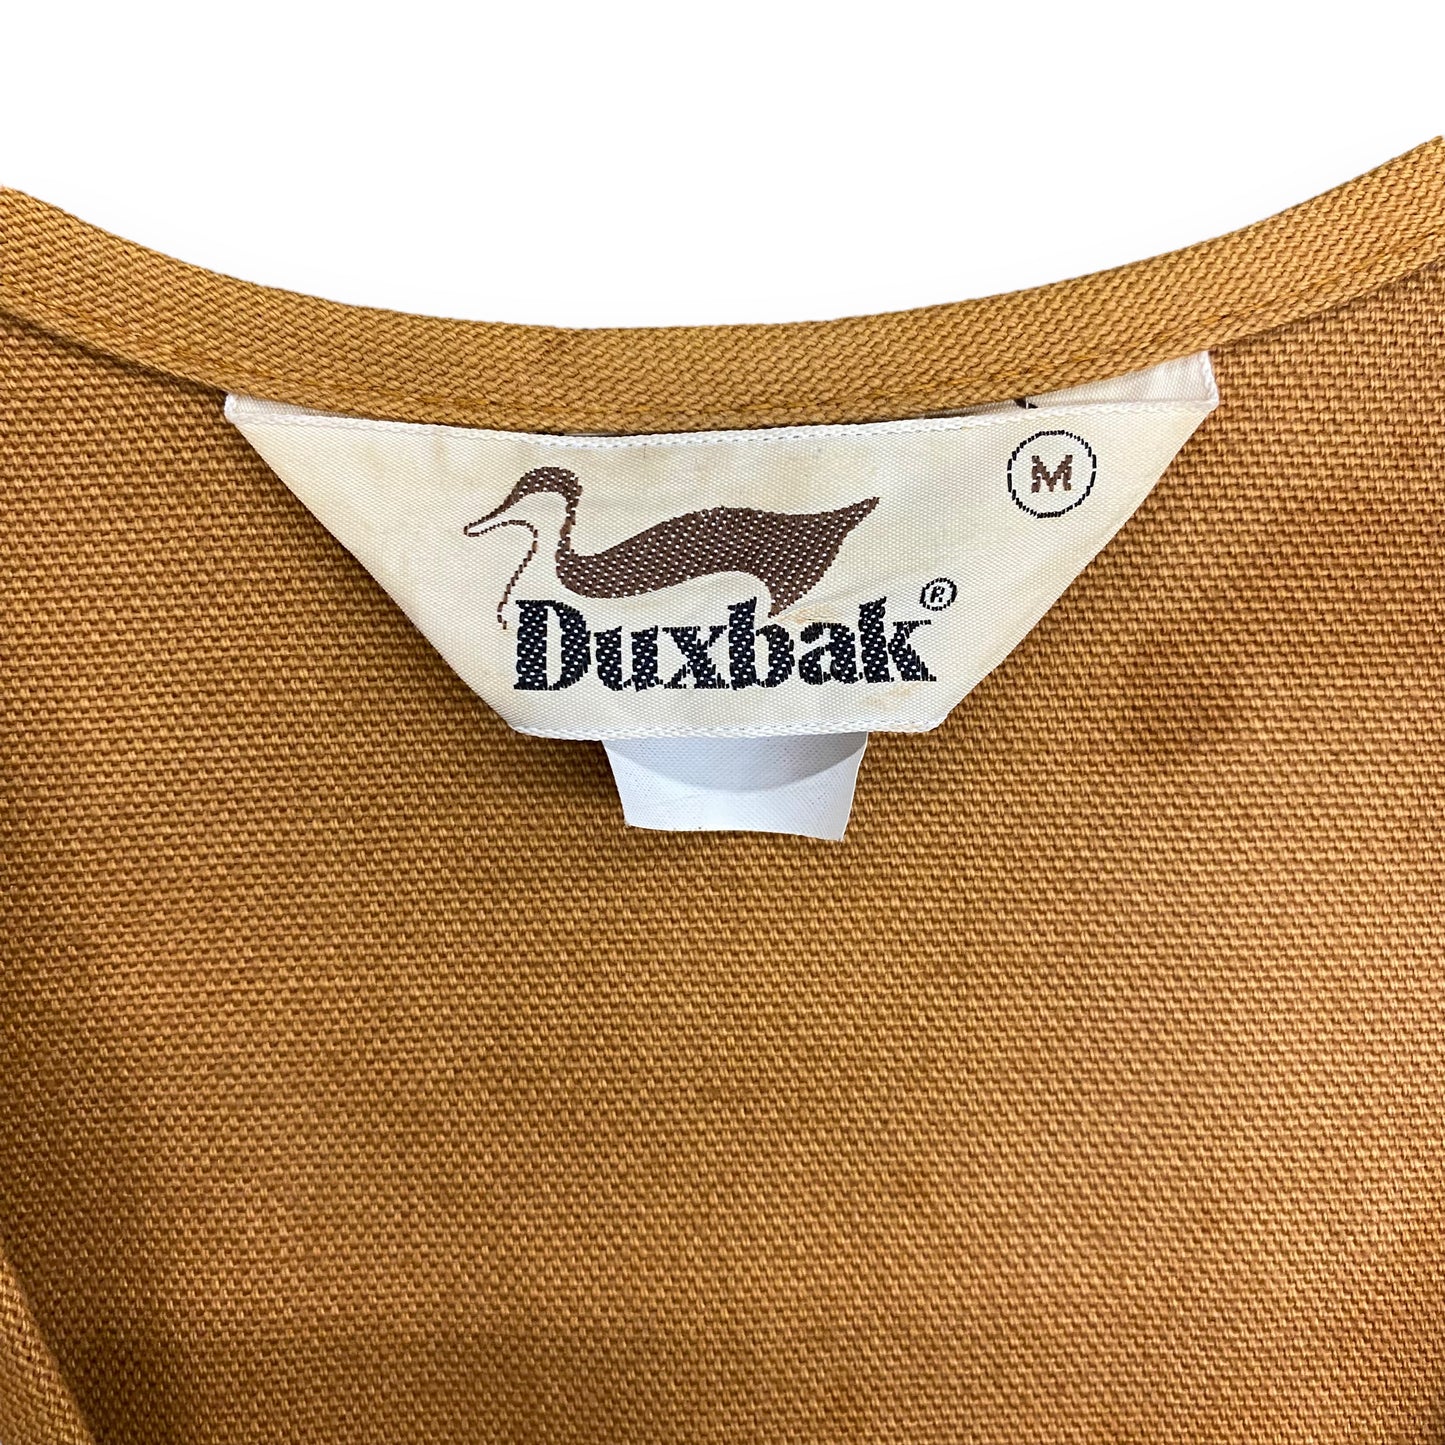 Vintage 1980s Duxbak Tan Canvas Hunting Vest - Size Medium